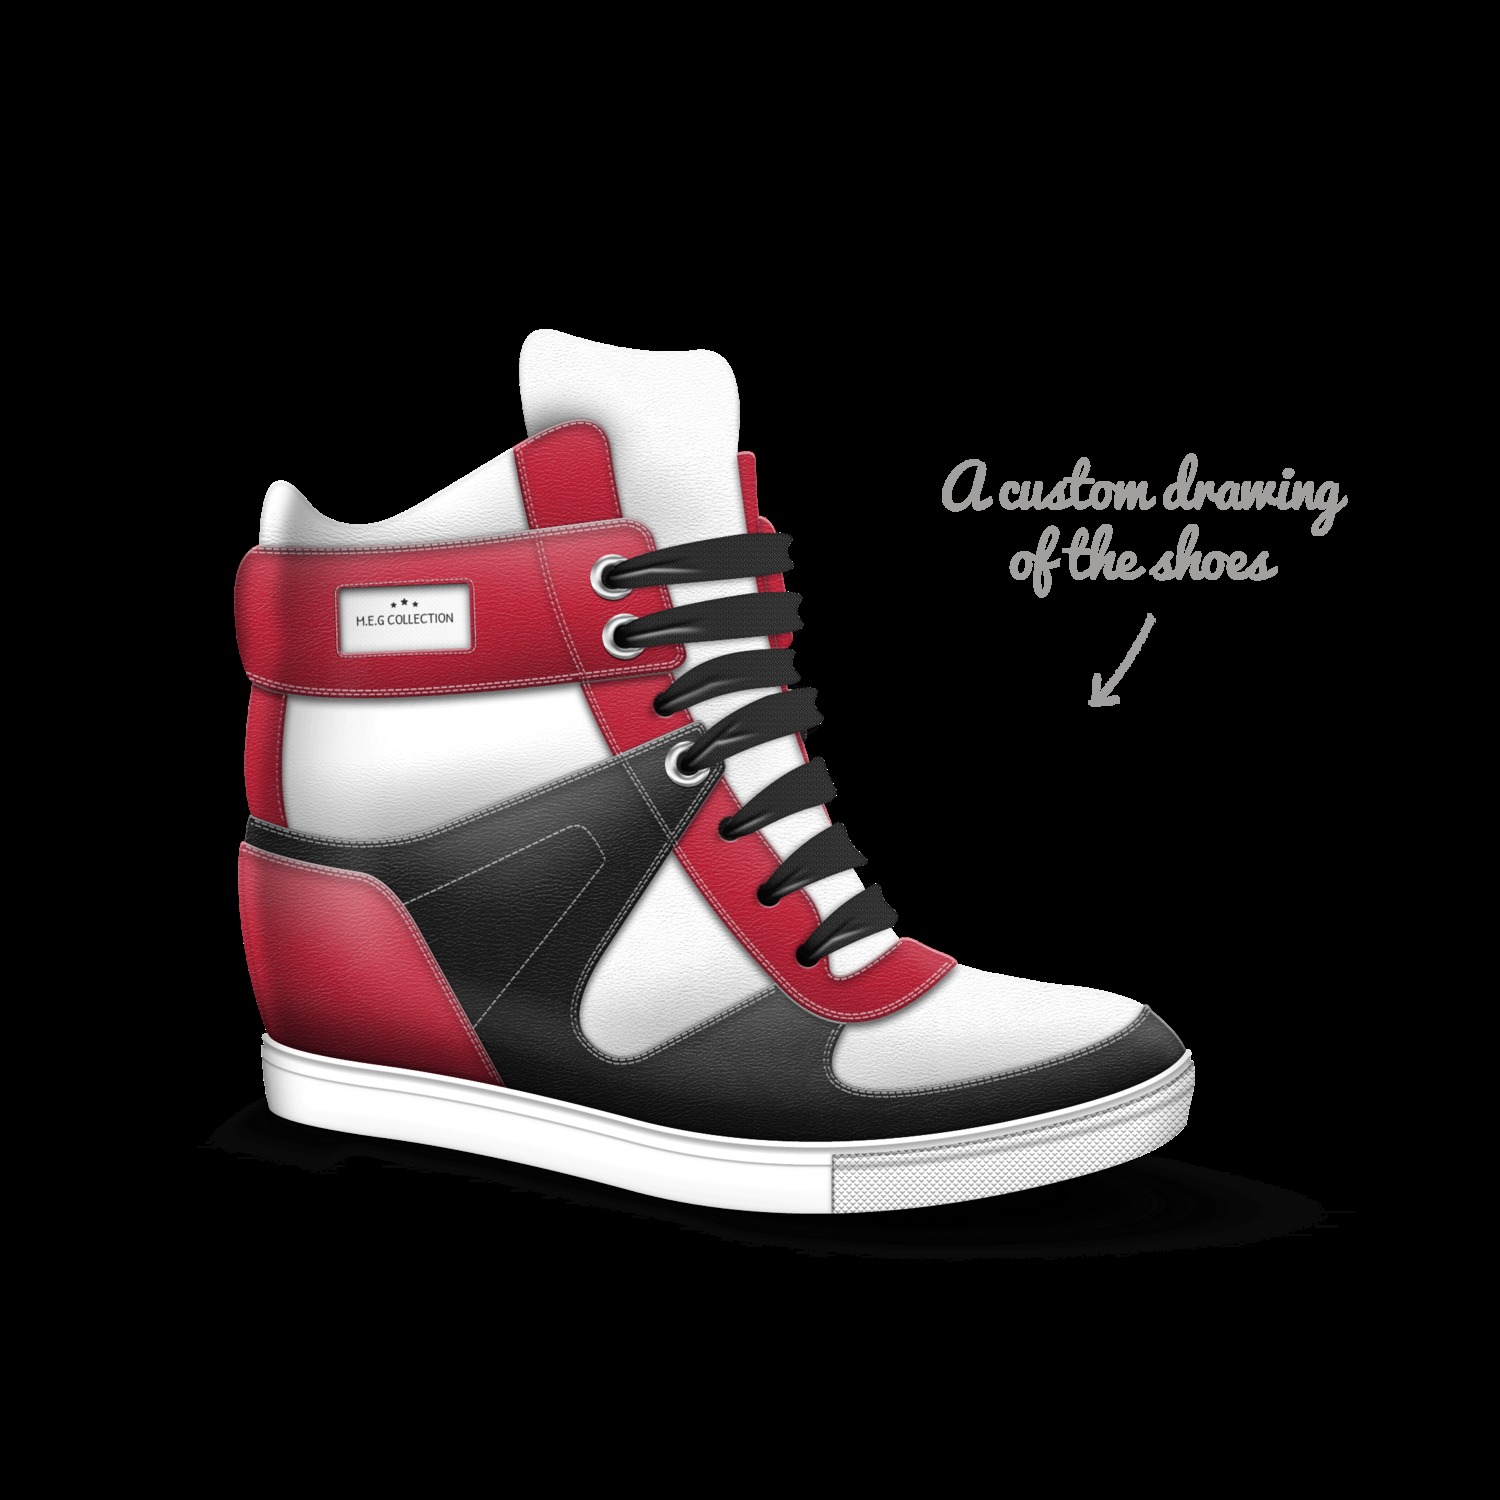 HARLEY QUINN | A Custom Shoe concept by 